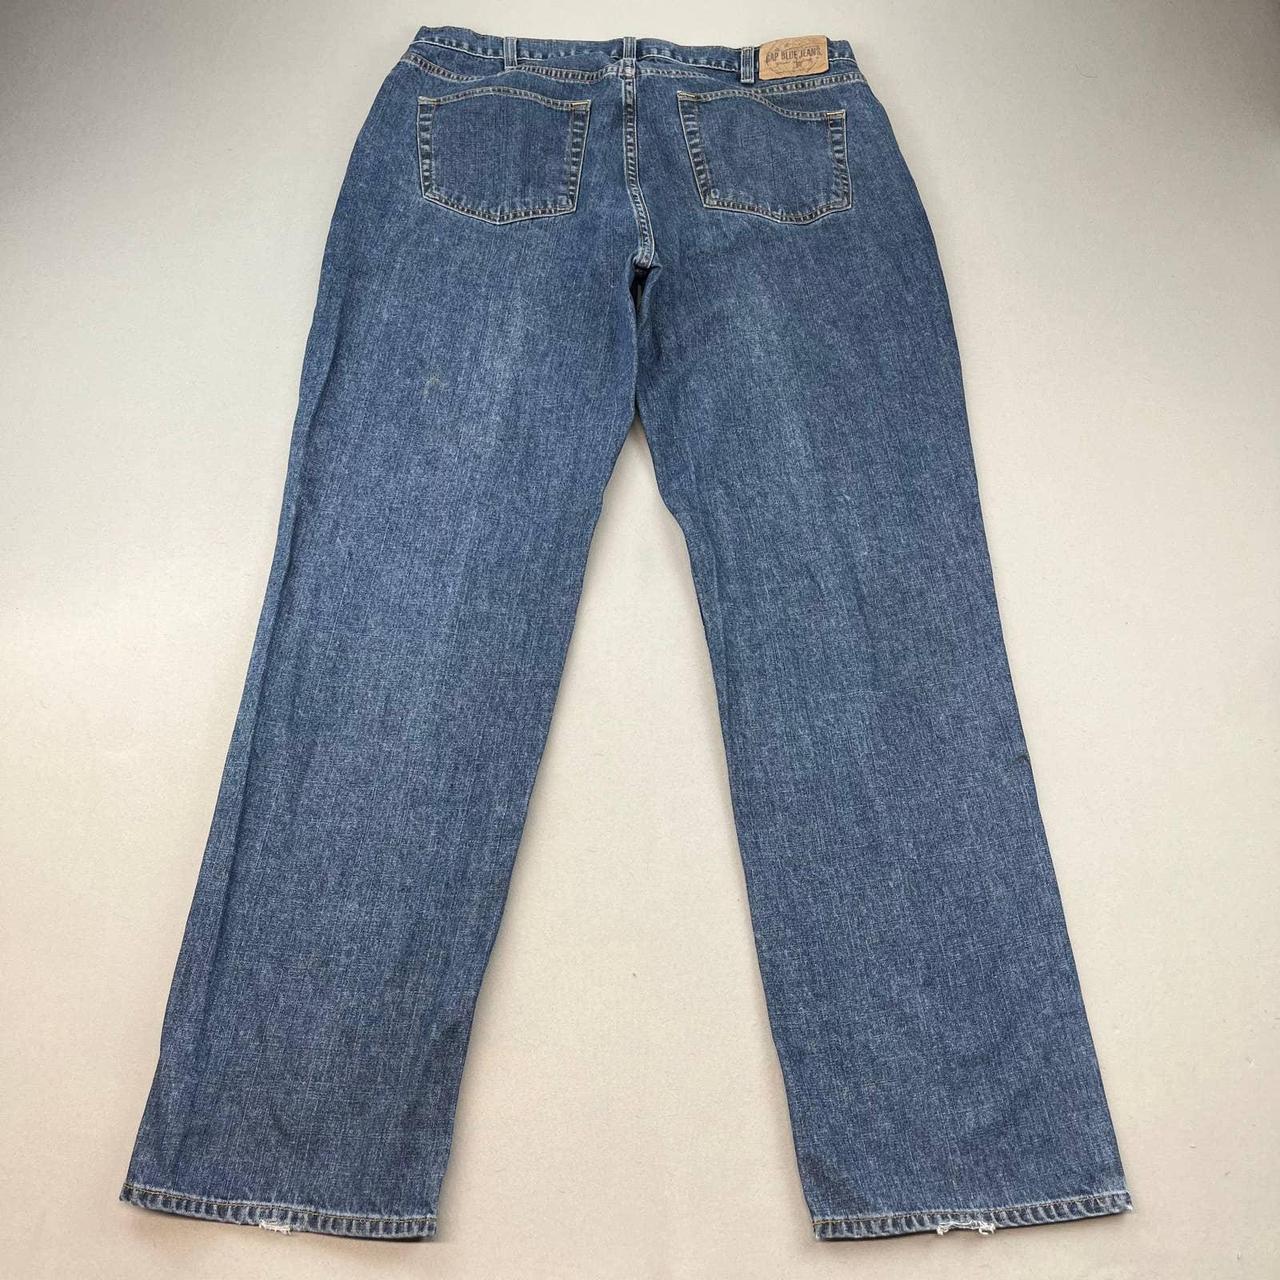 Vintage GAP Relaxed Fit Blue Denim Jeans Mens 38x34... - Depop